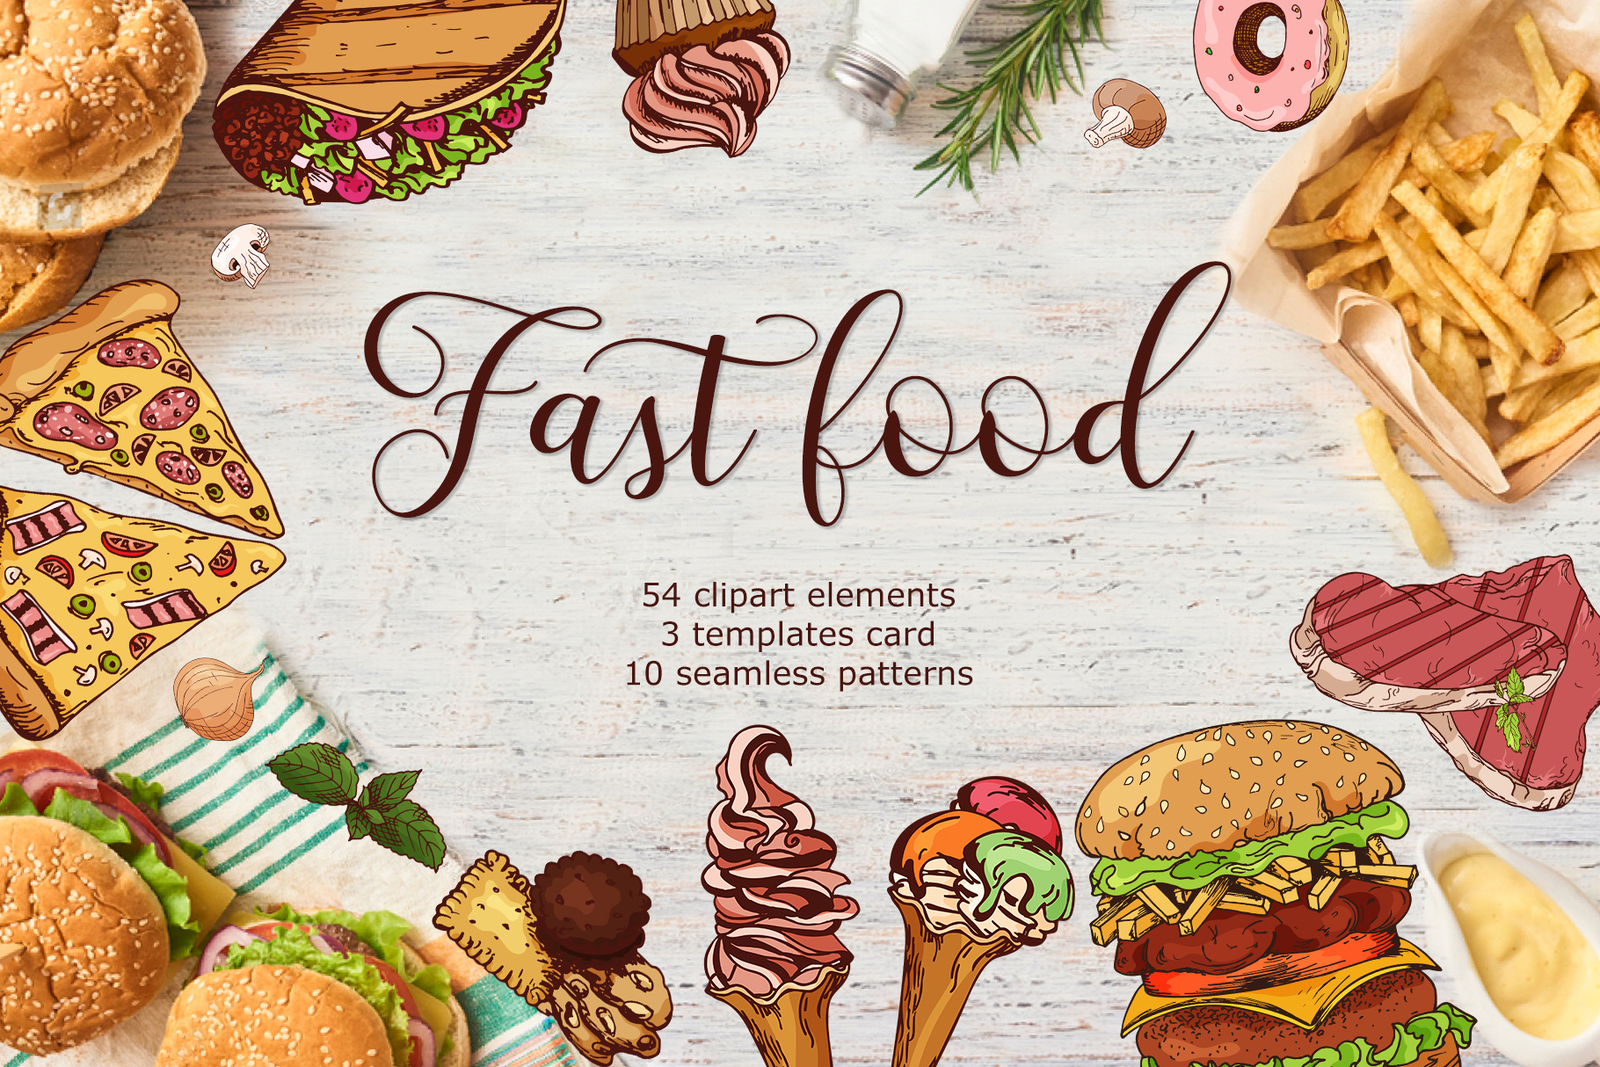 Fast foodclipartmenu illustrations.